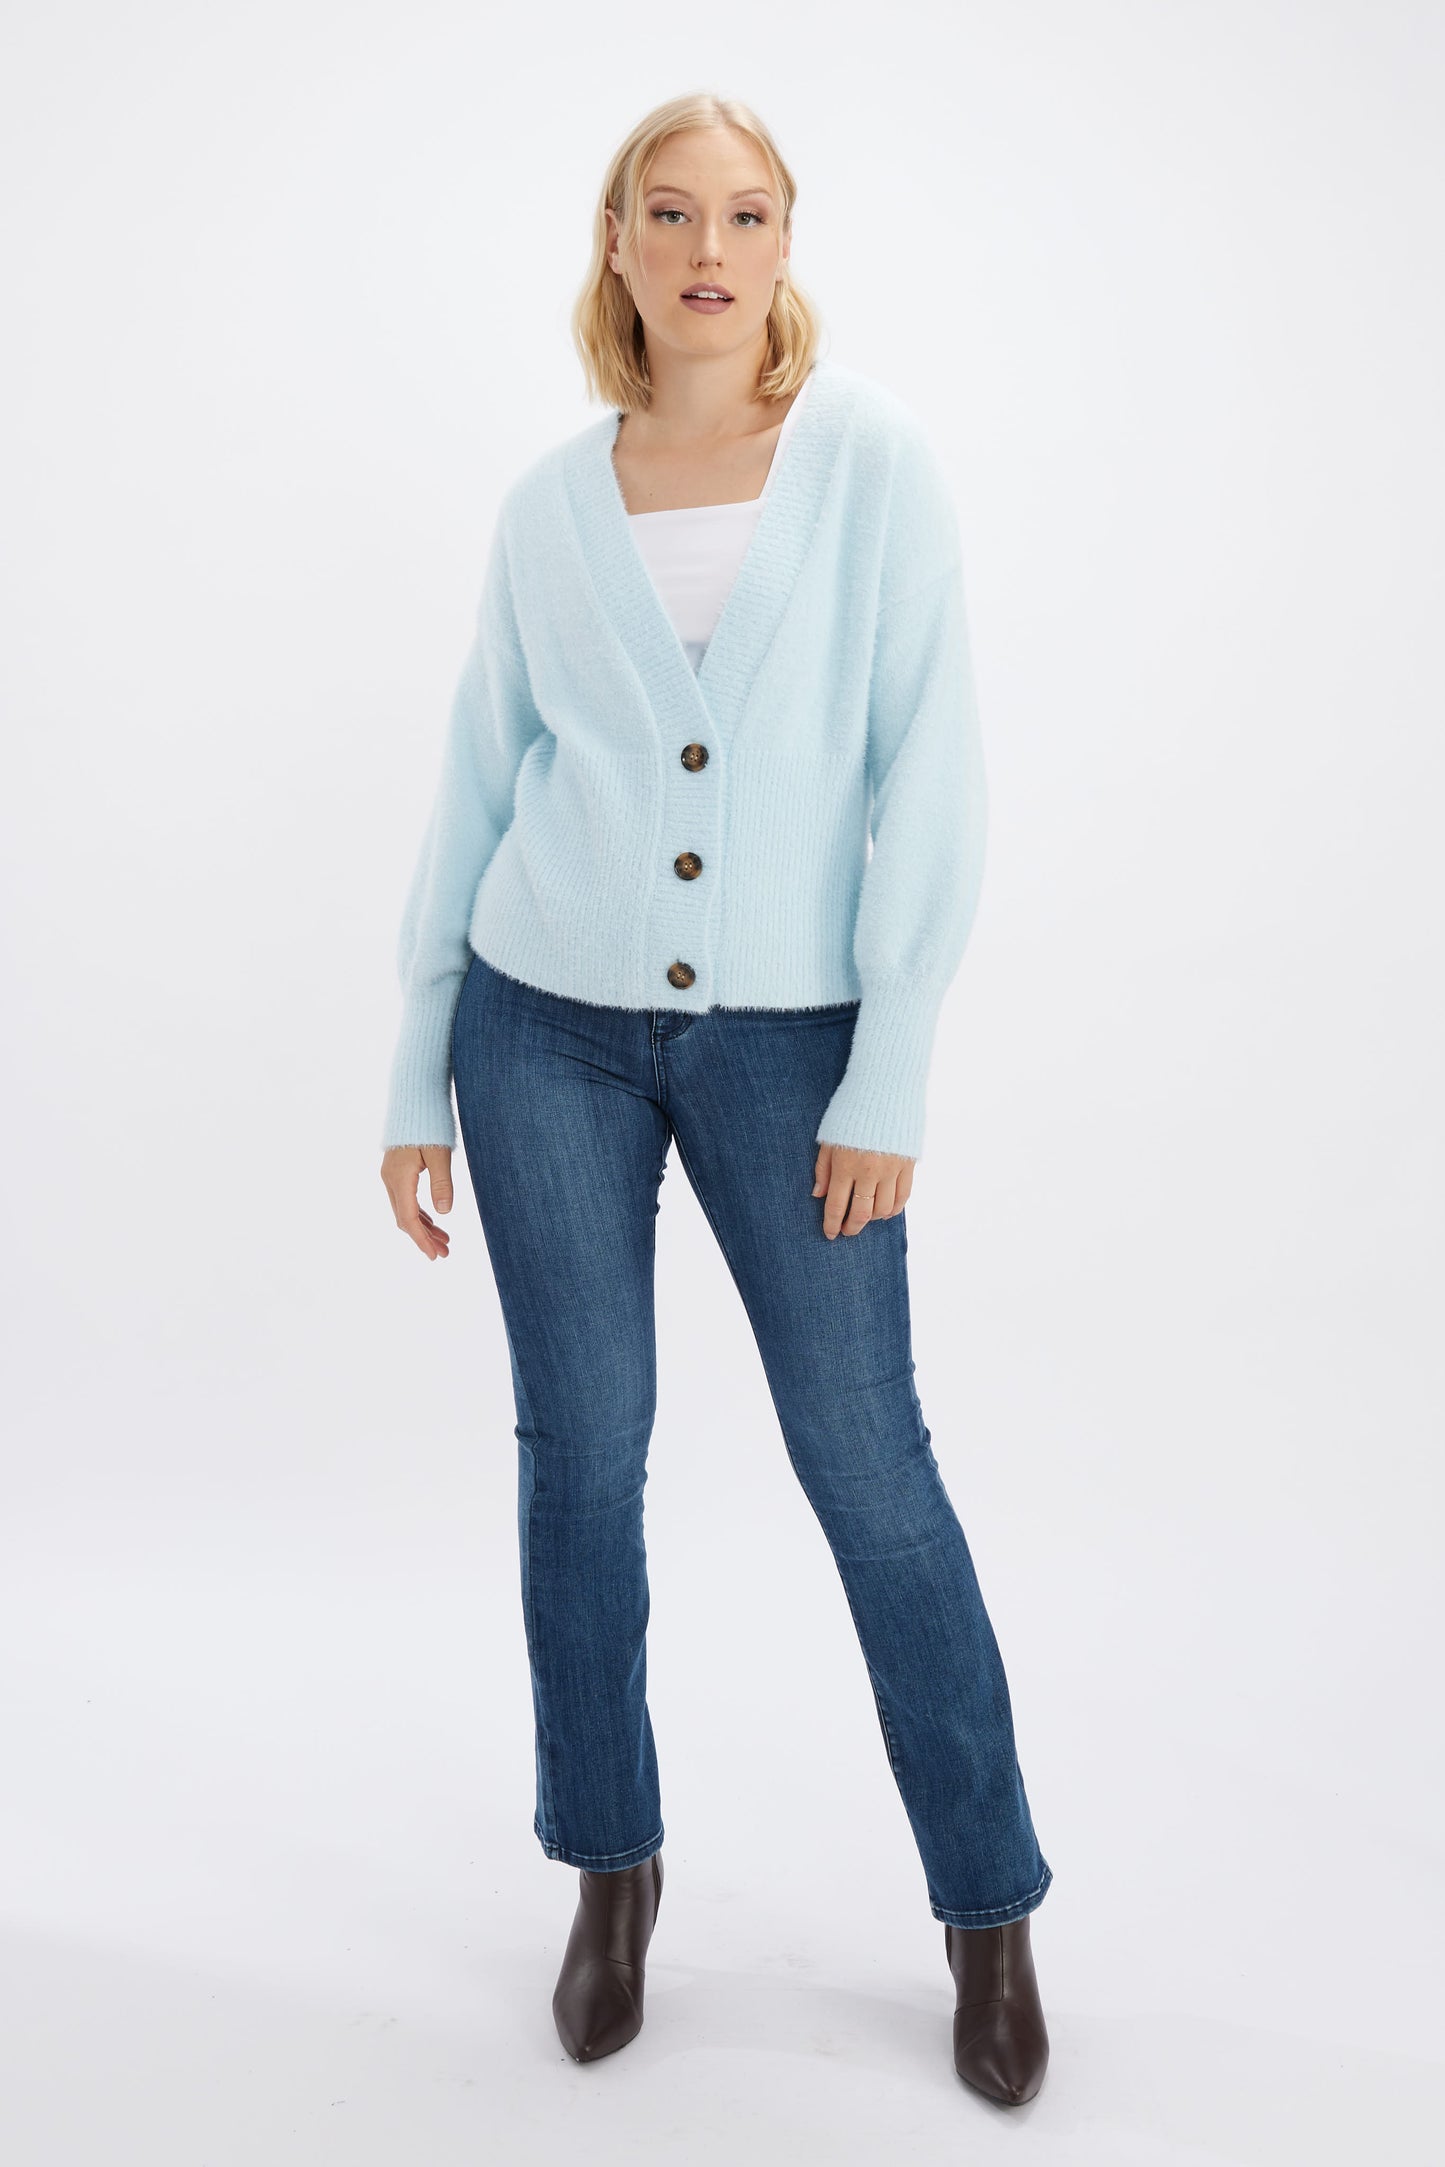 Melissa Nepton New York Blue Cardi Sweater